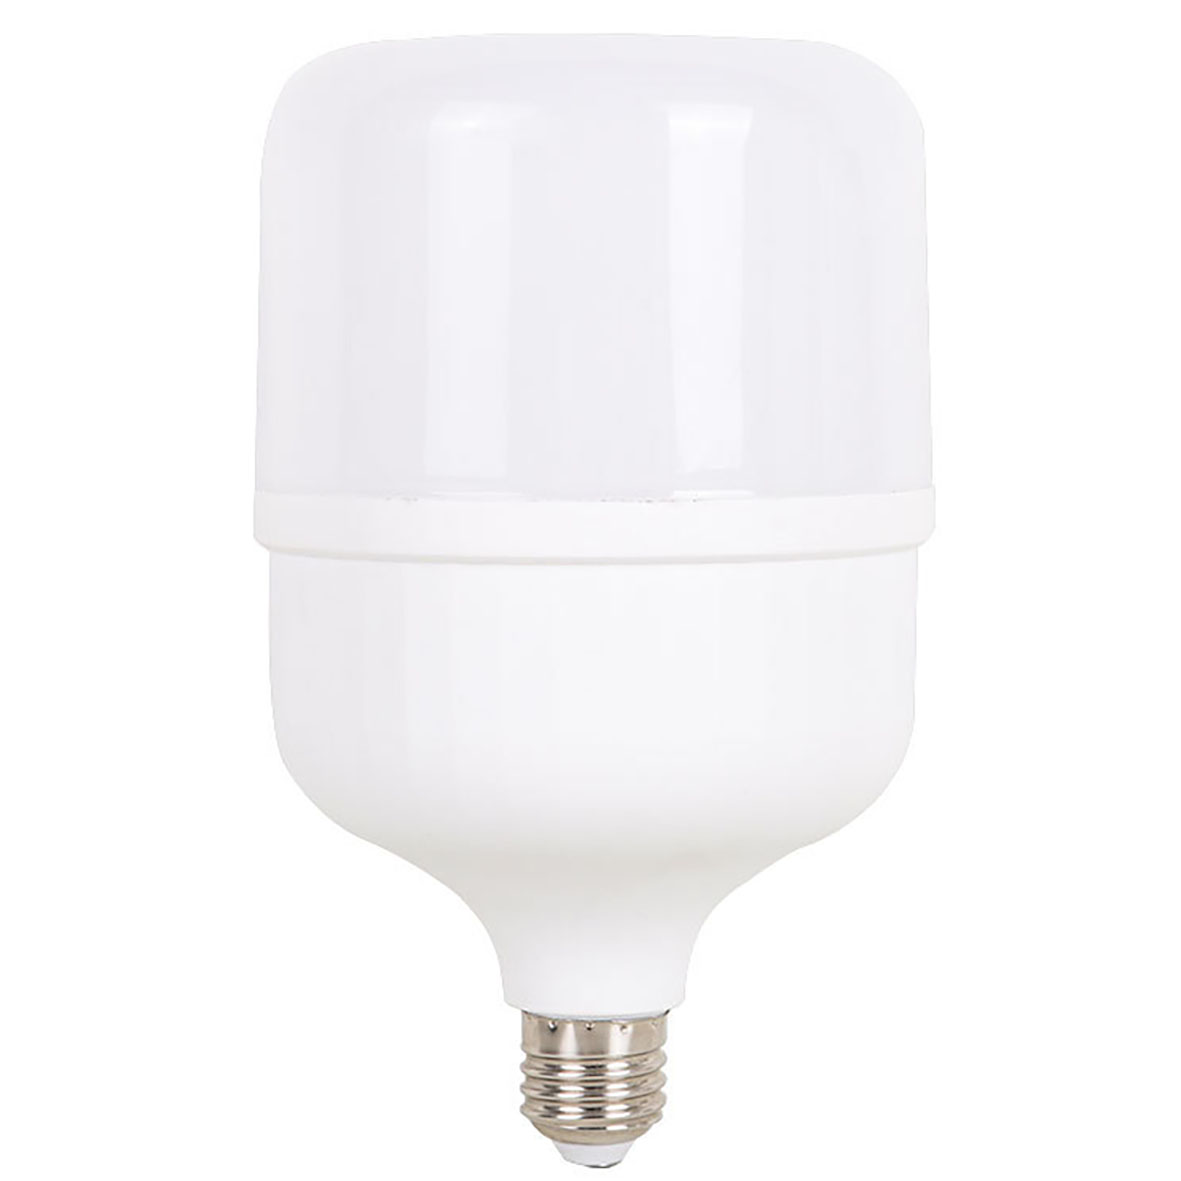 Hot Sale On Amazon LED Sport Lamp Cold white warm Light BULB Shade Type T LED Light